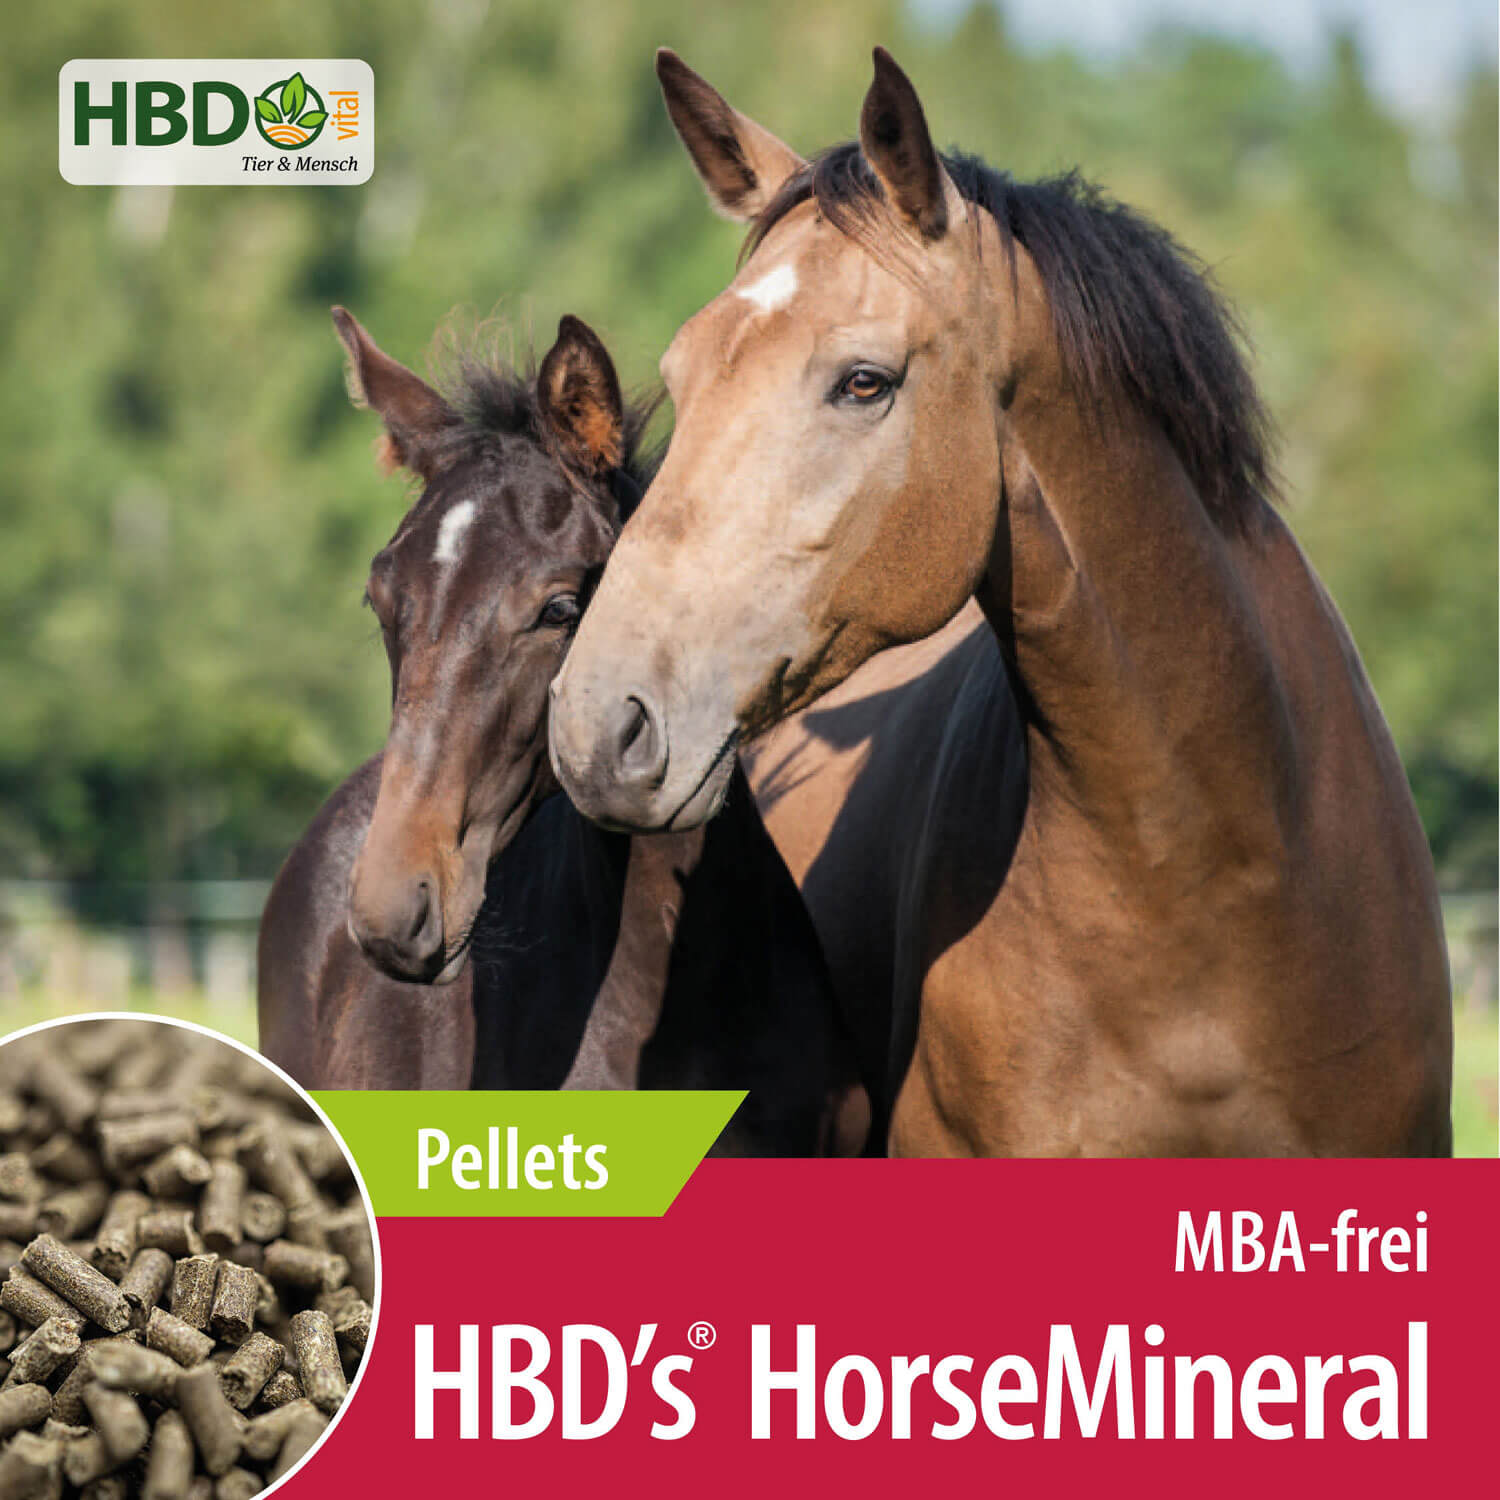 HBD-Agrar - HBD's® HorseMineral MELASSEFREI – ohne Bierhefe, ohne Apfeltrester – pelletiert